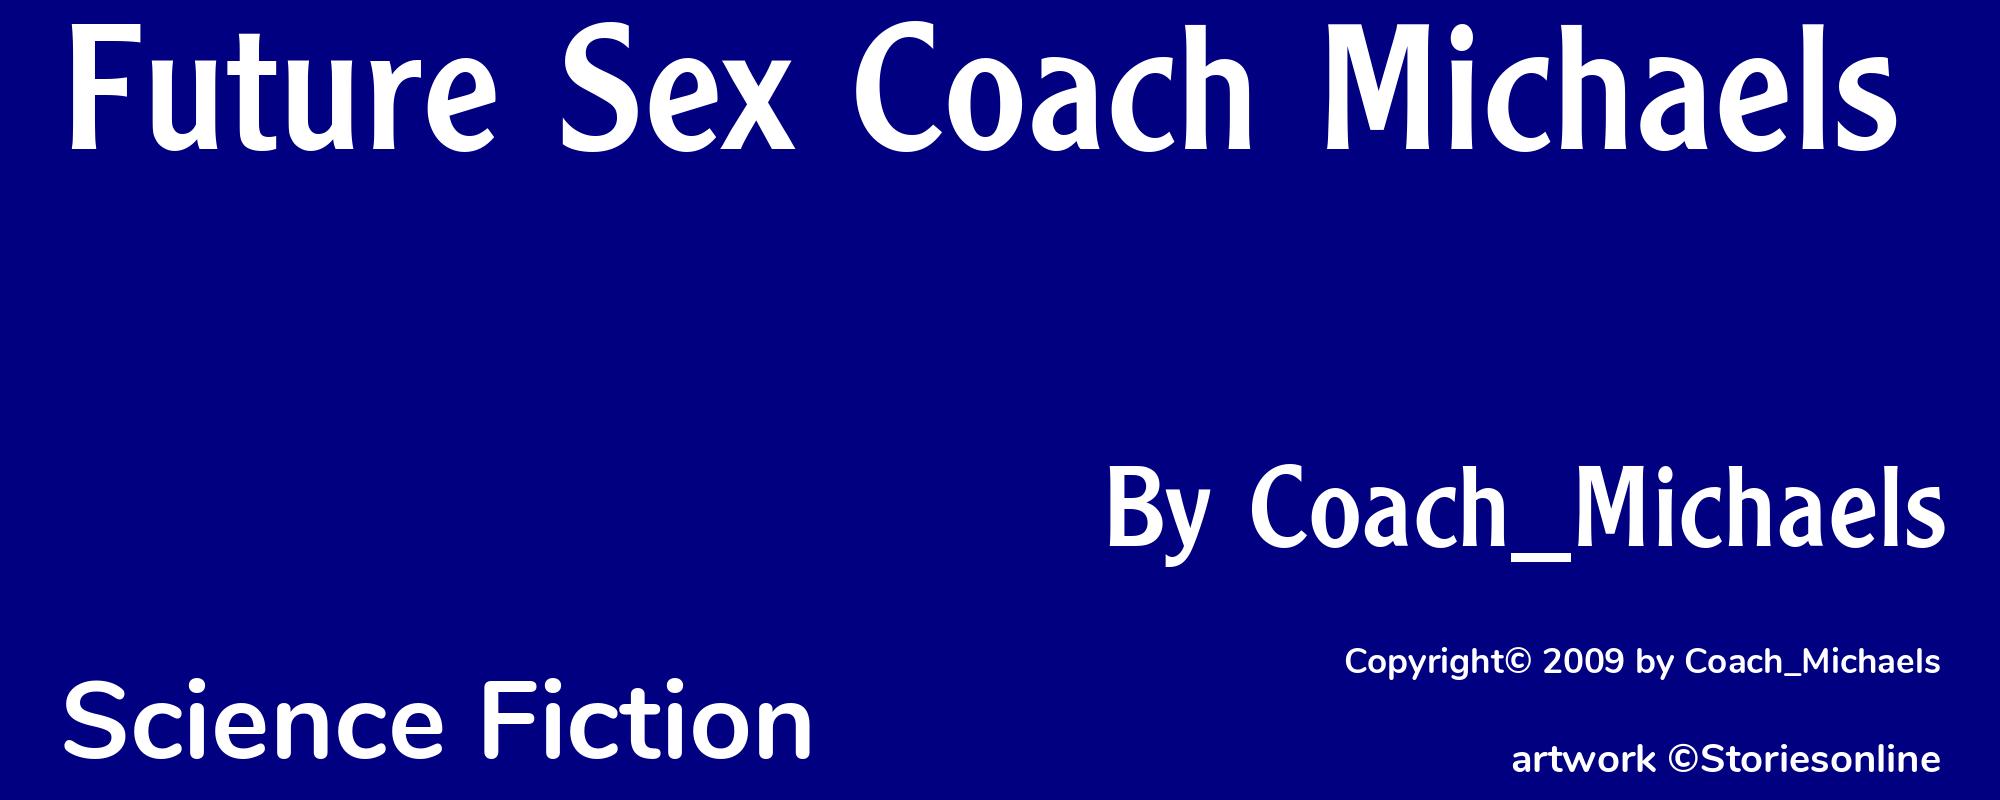 Future Sex Coach Michaels - Cover